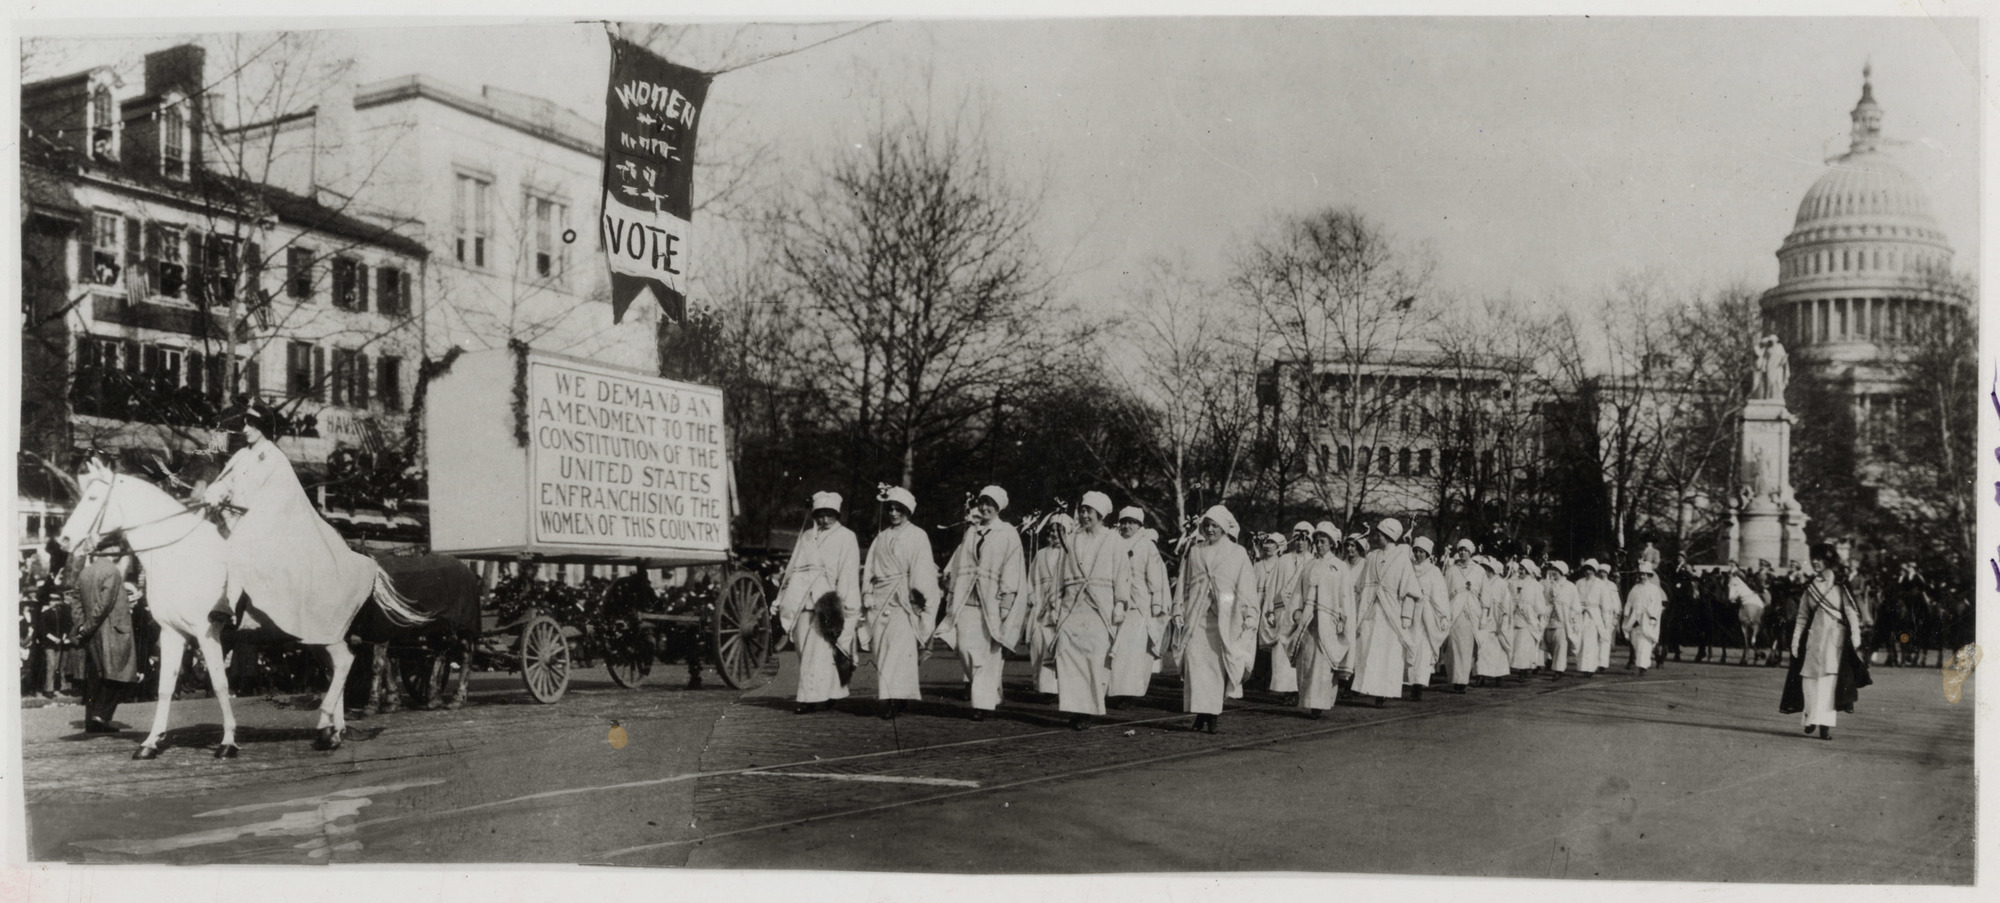 1913 Woman Suffrage Procession